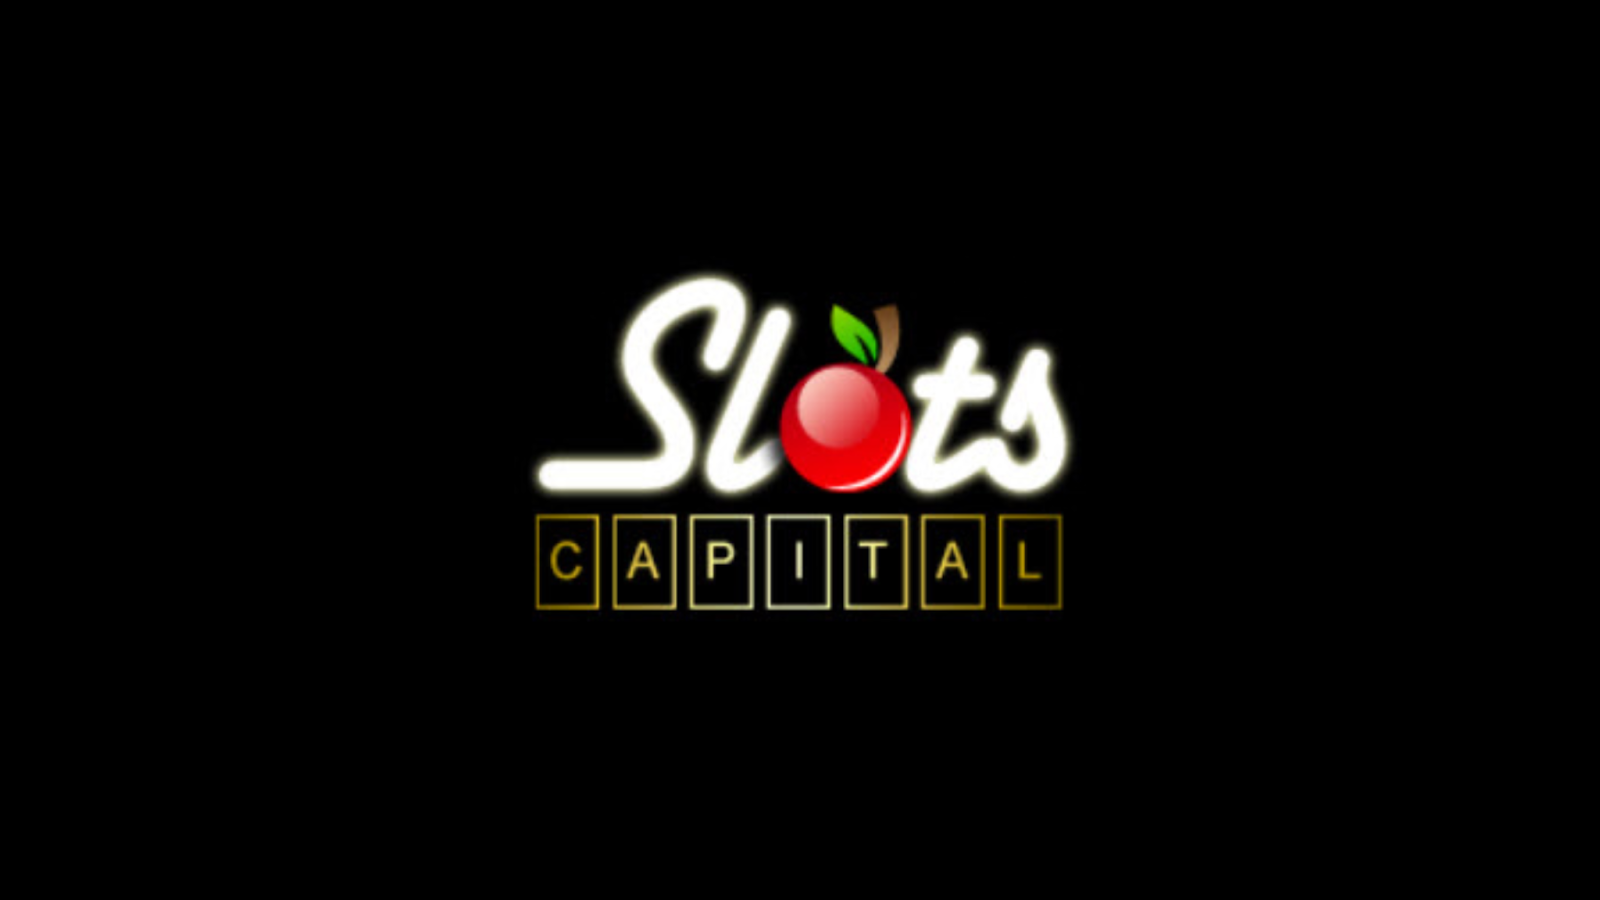 Slots Capital Review